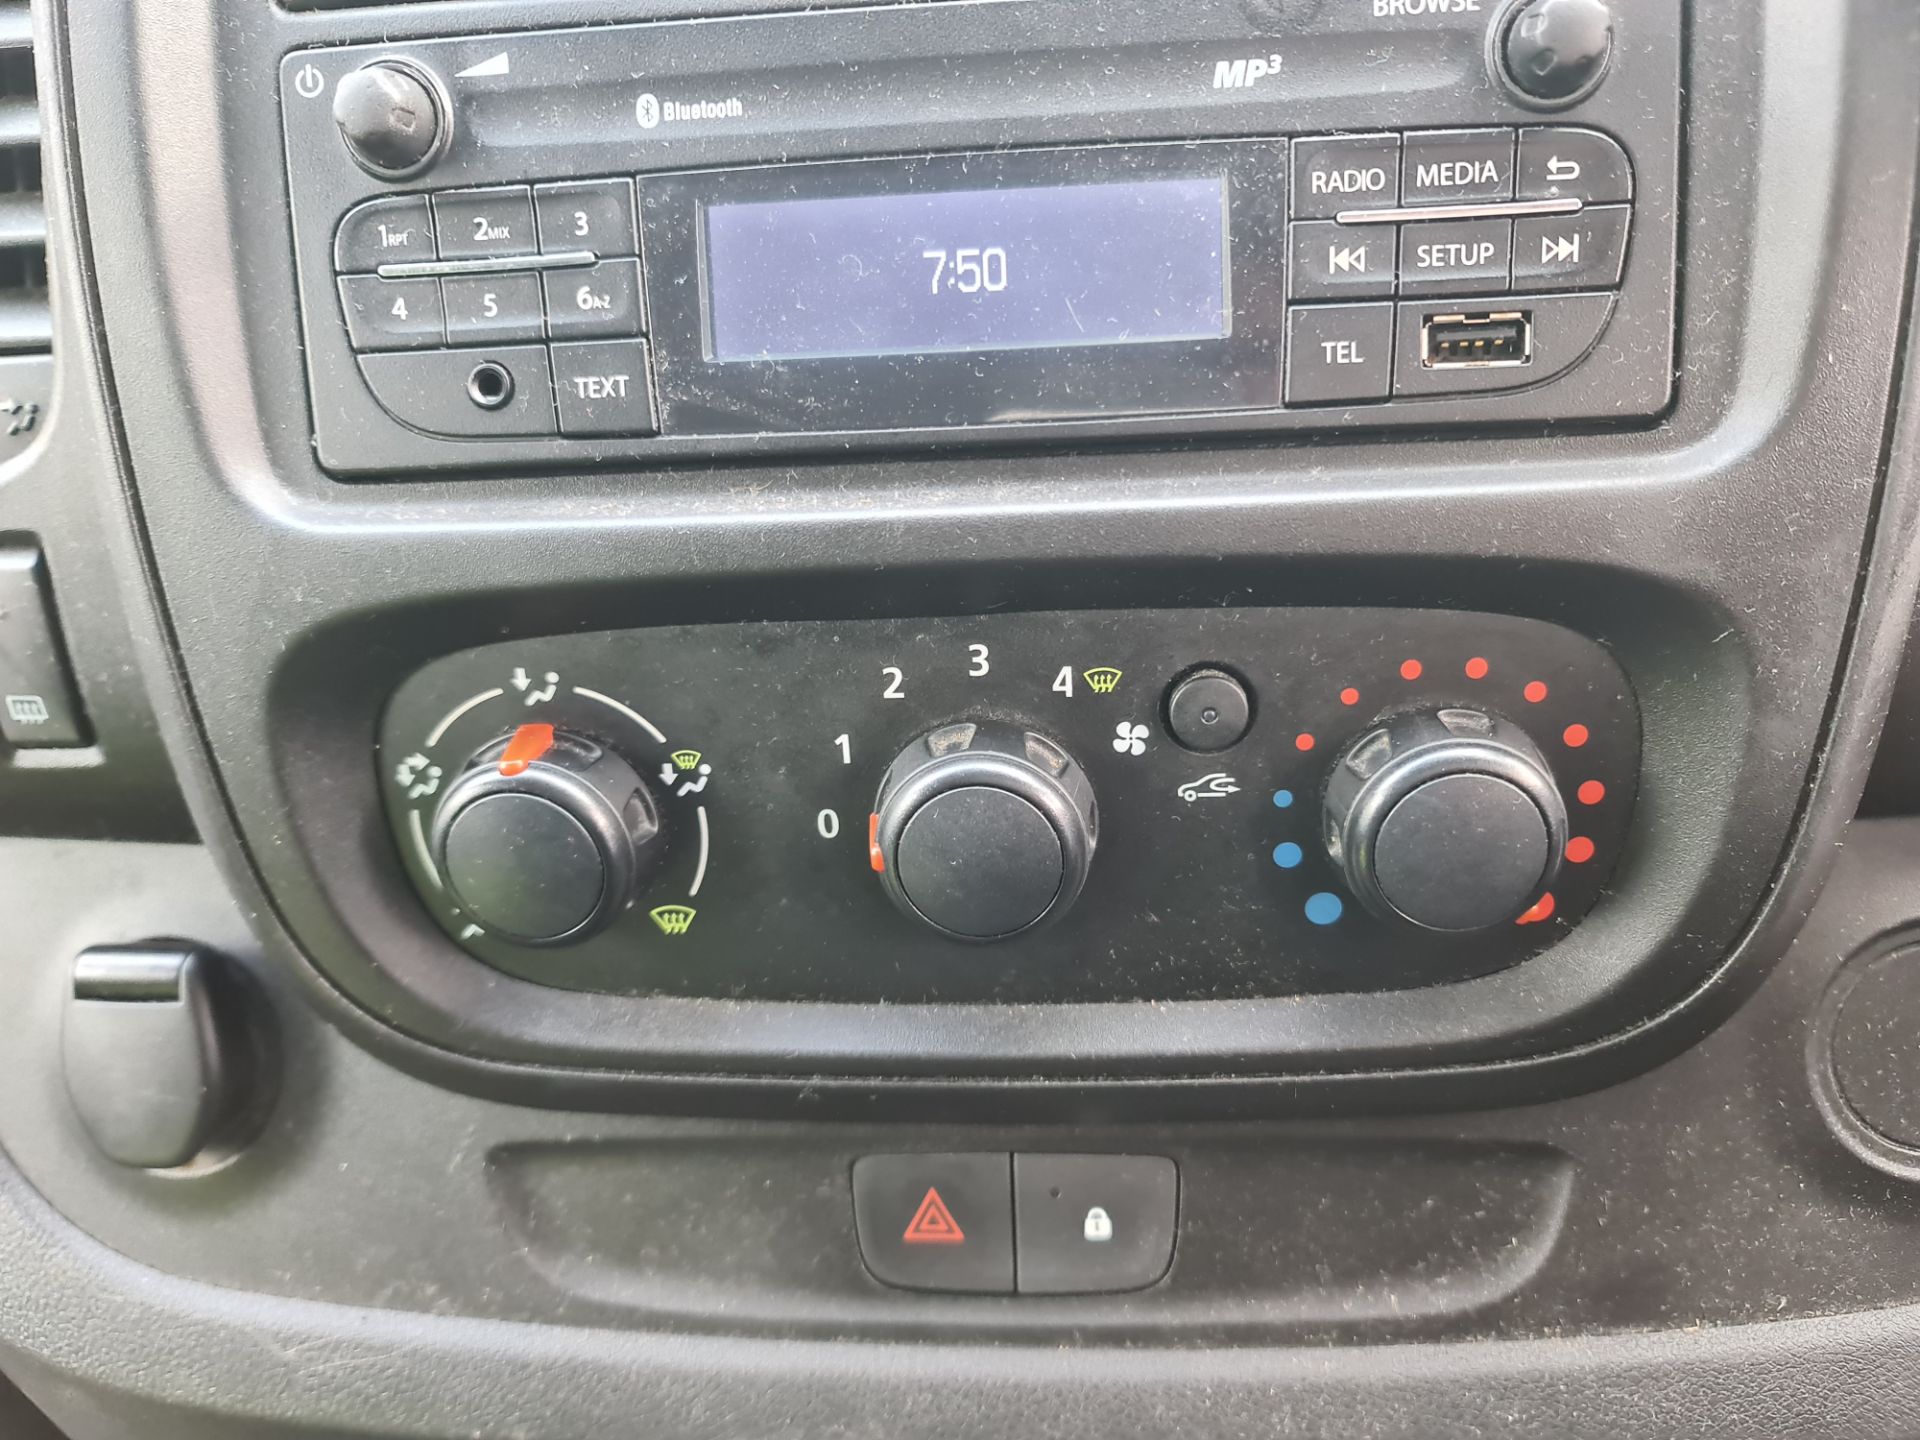 2015 Vauxhall Vivaro 2900 CDTi panel van - Image 78 of 81